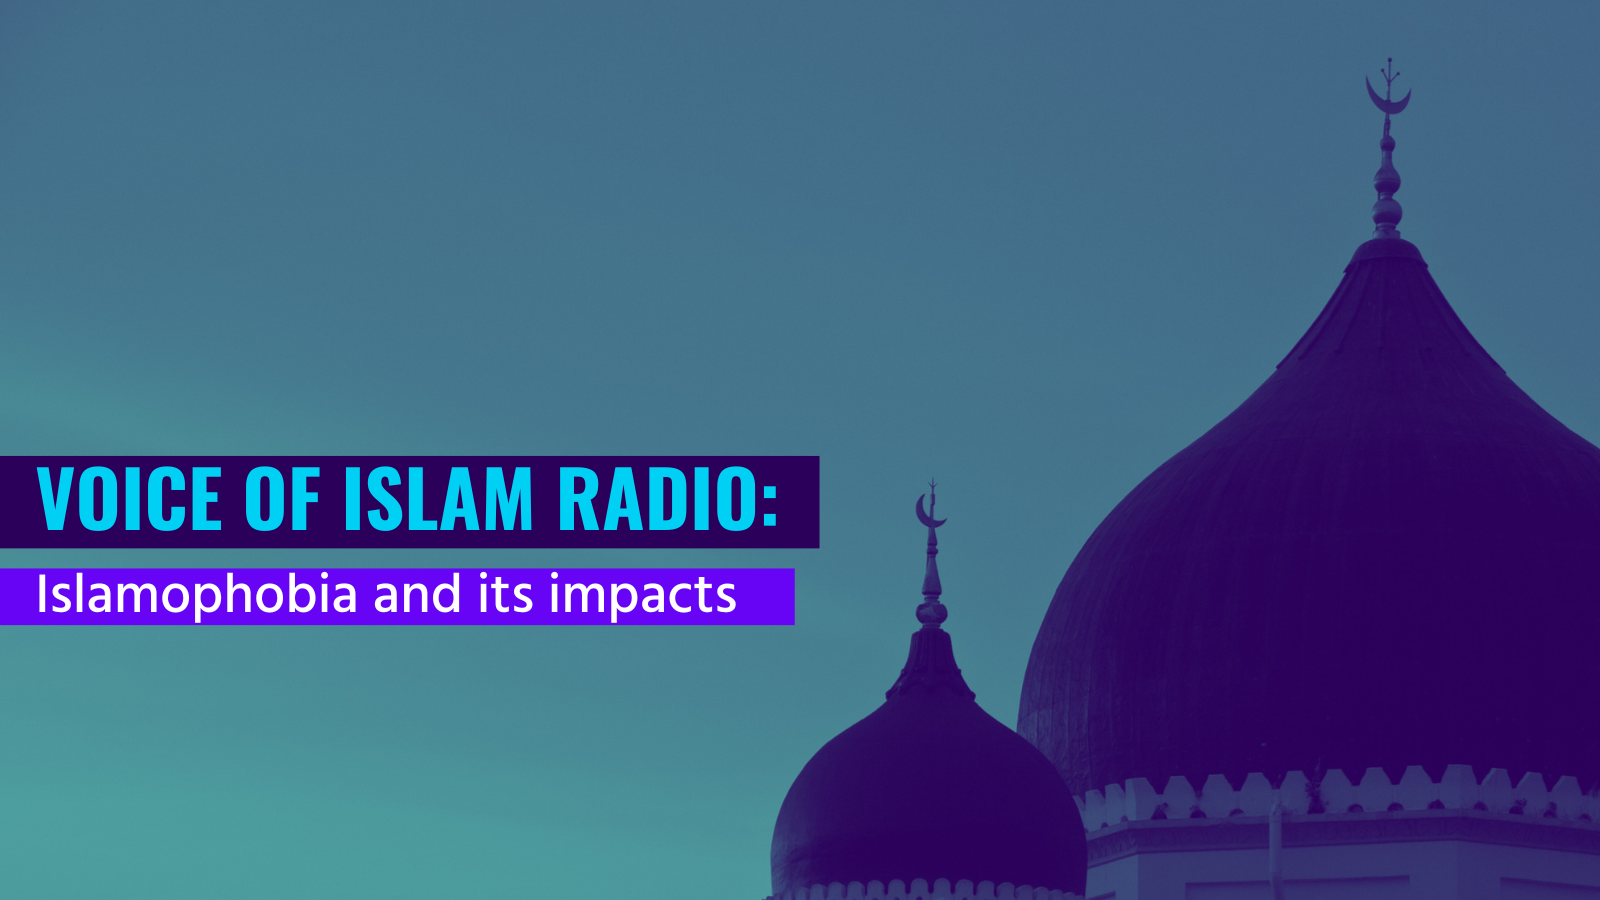 Voice of Islam Radio UK ENAR discusses Islamophobia